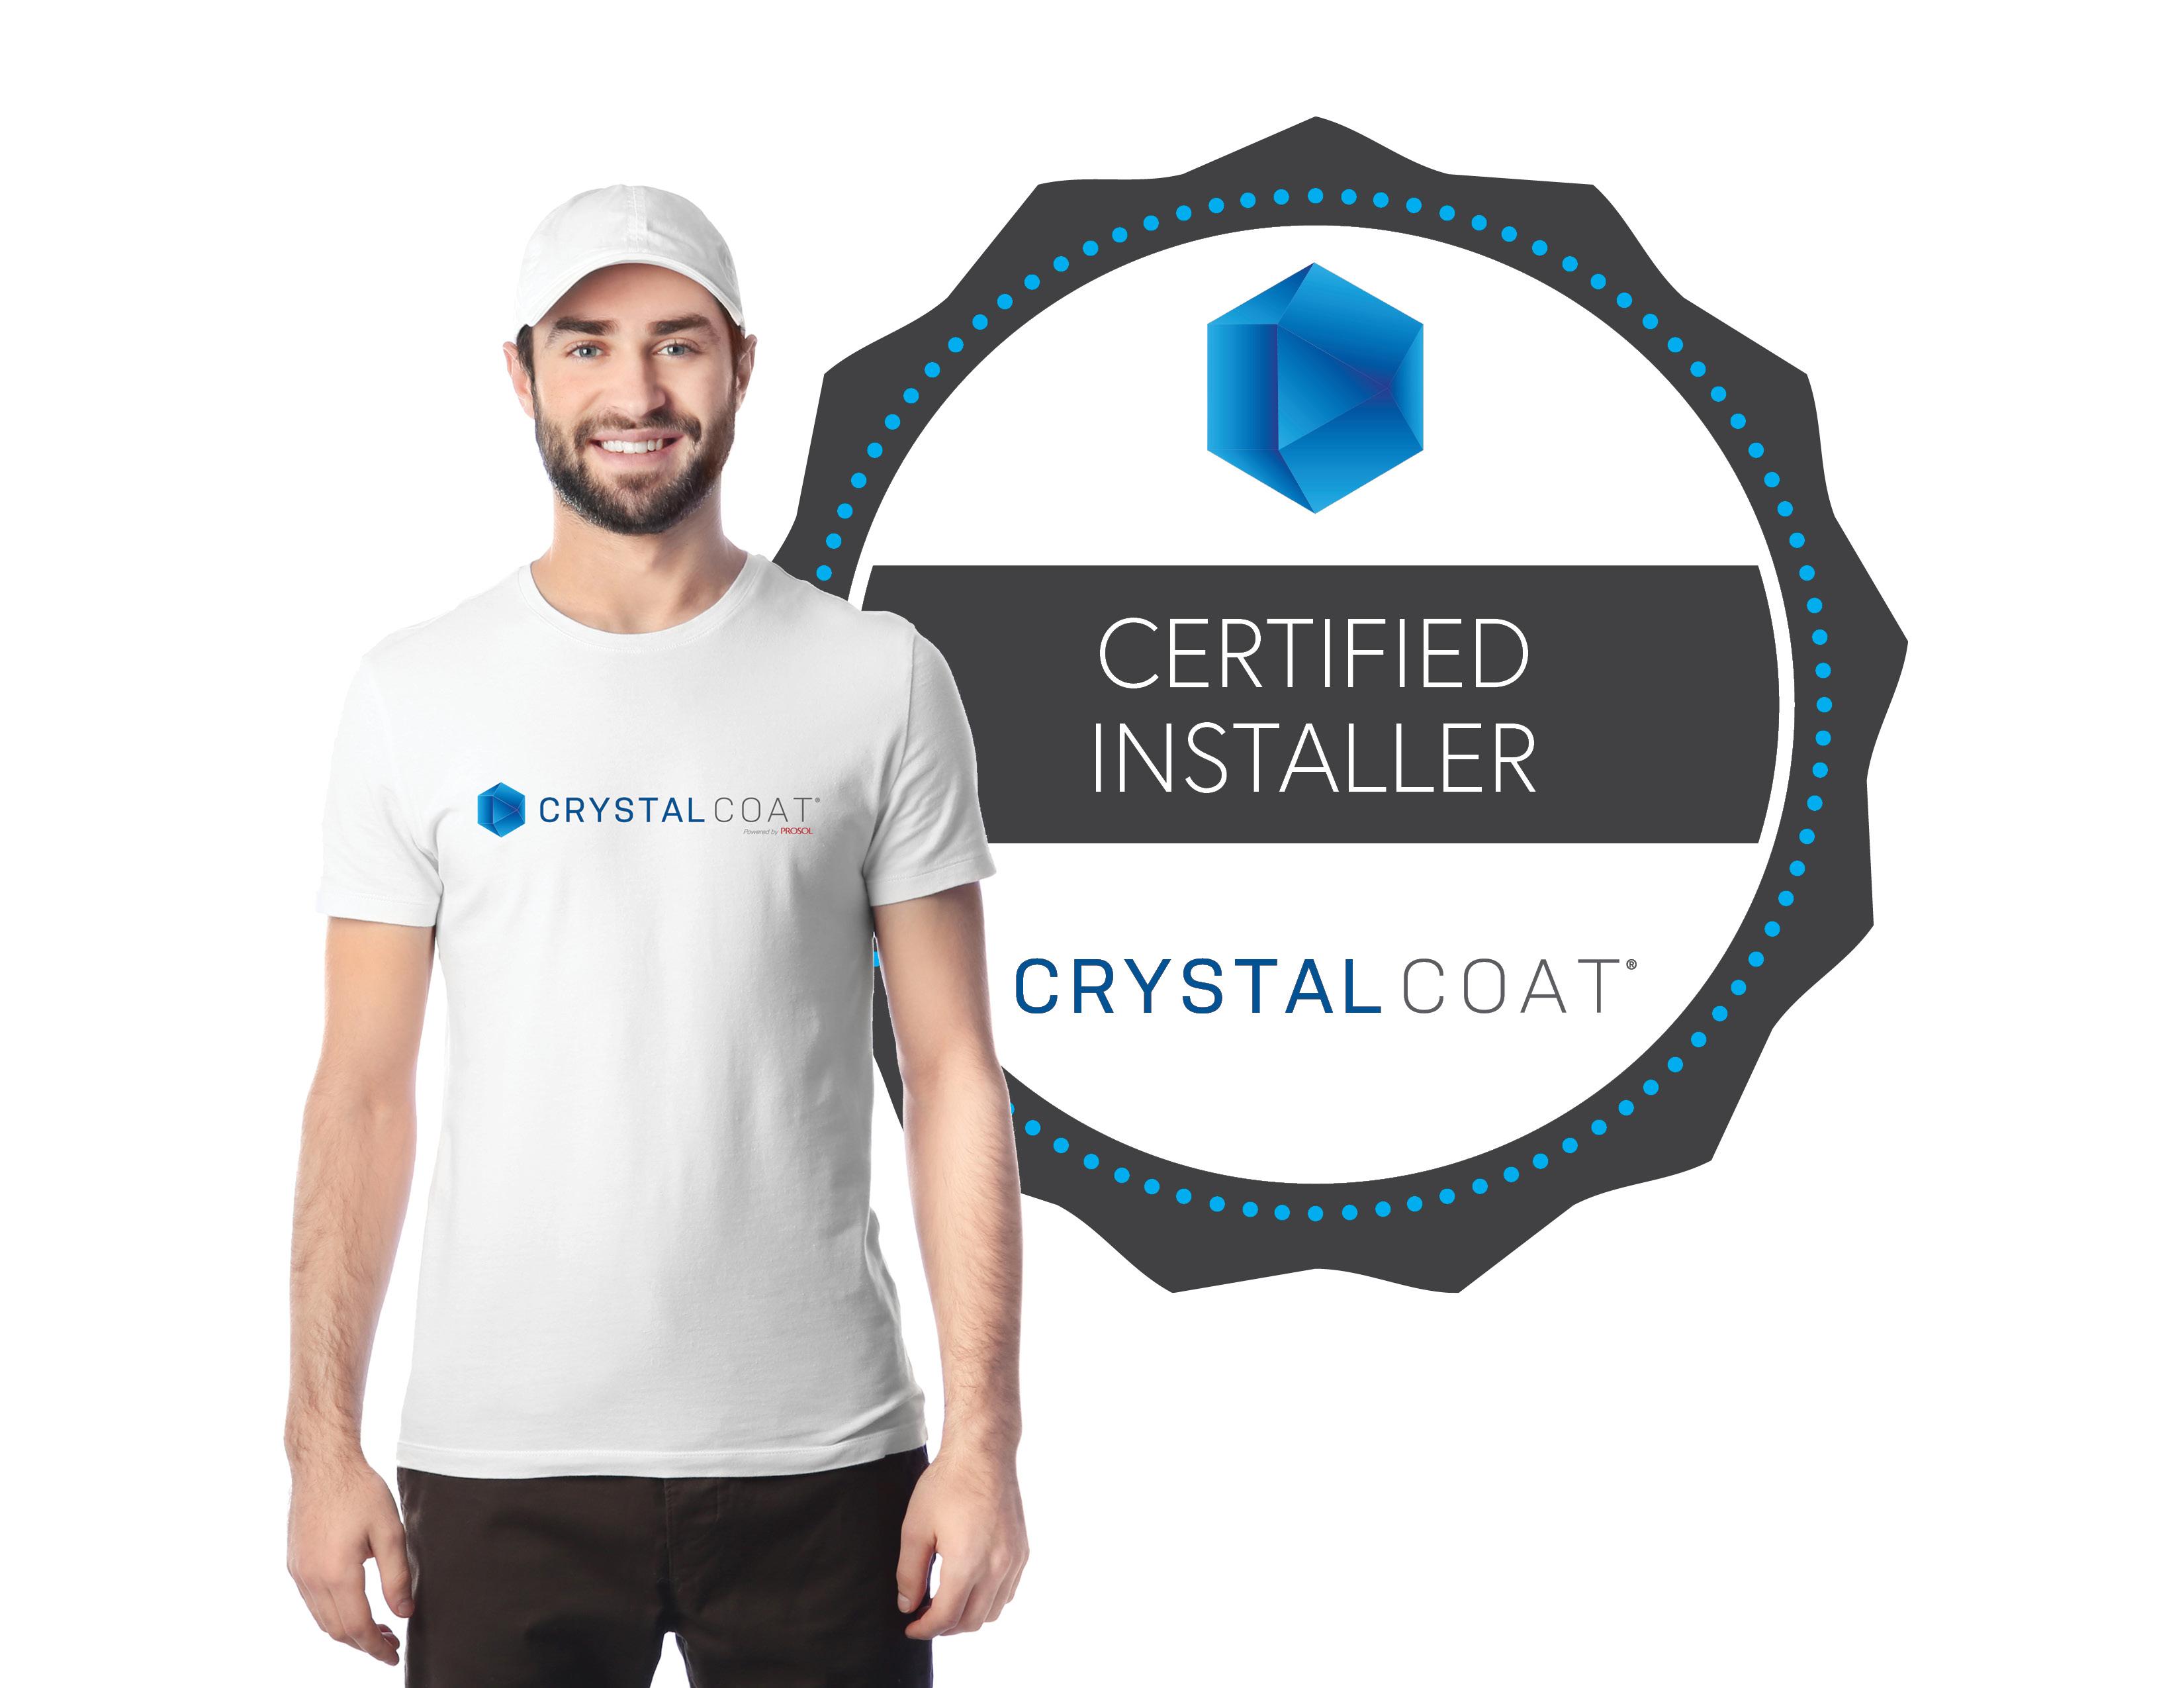 Crystal Coat Certified Installers Program

